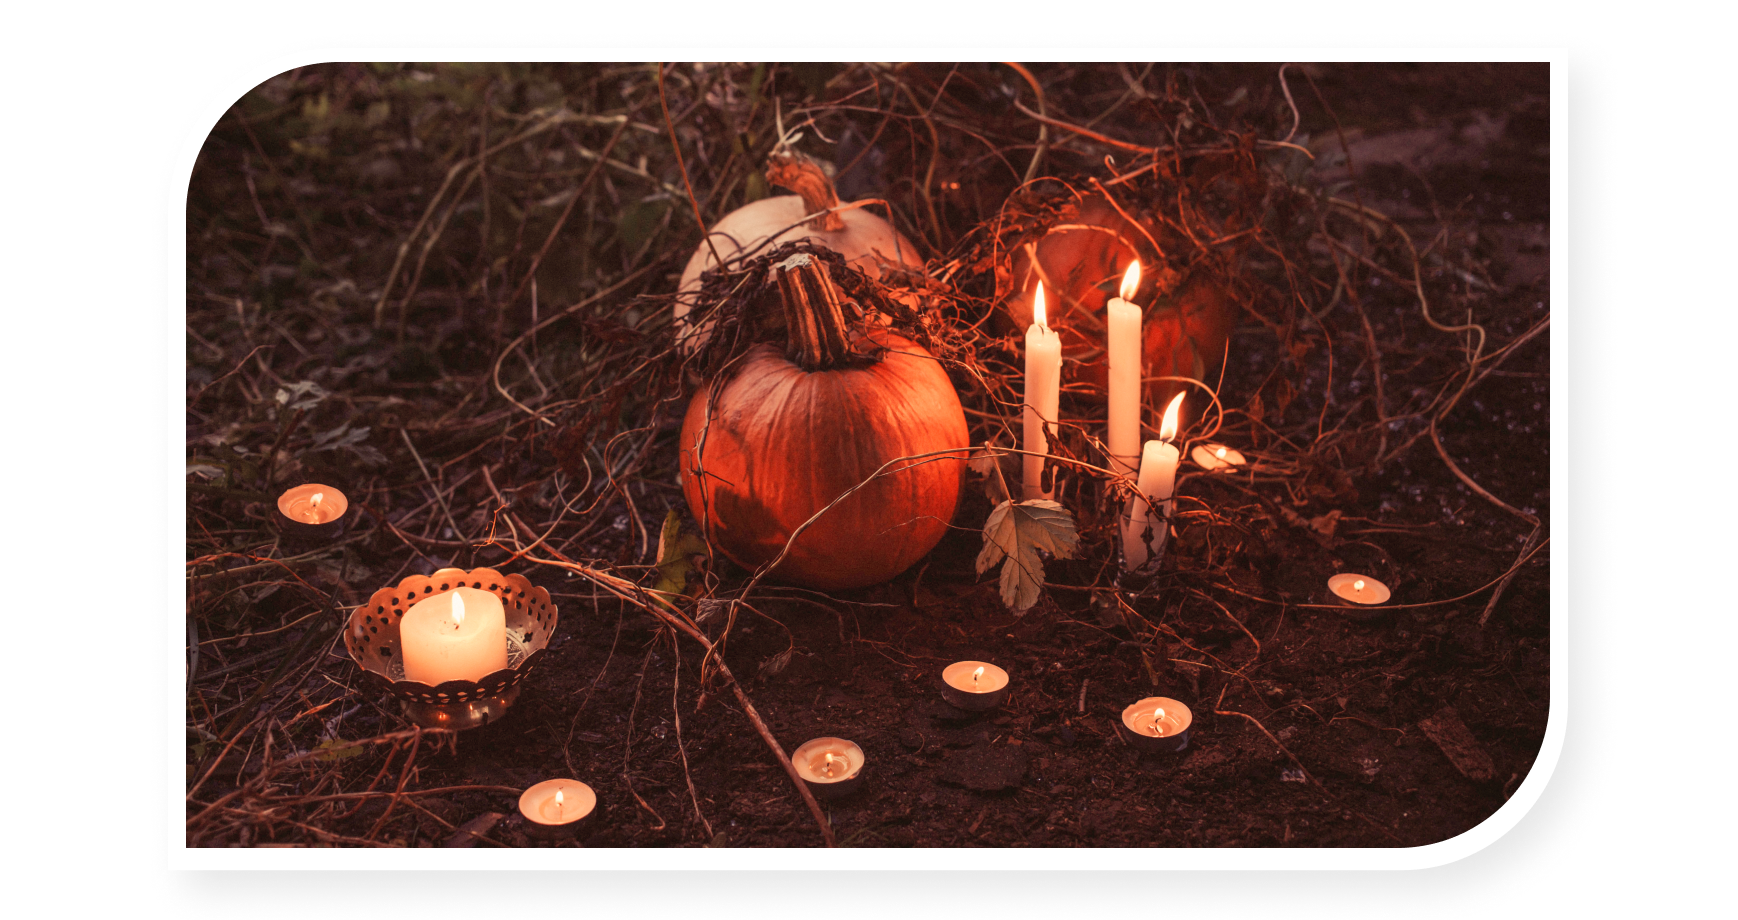 pumpkin and lights in halloween theme